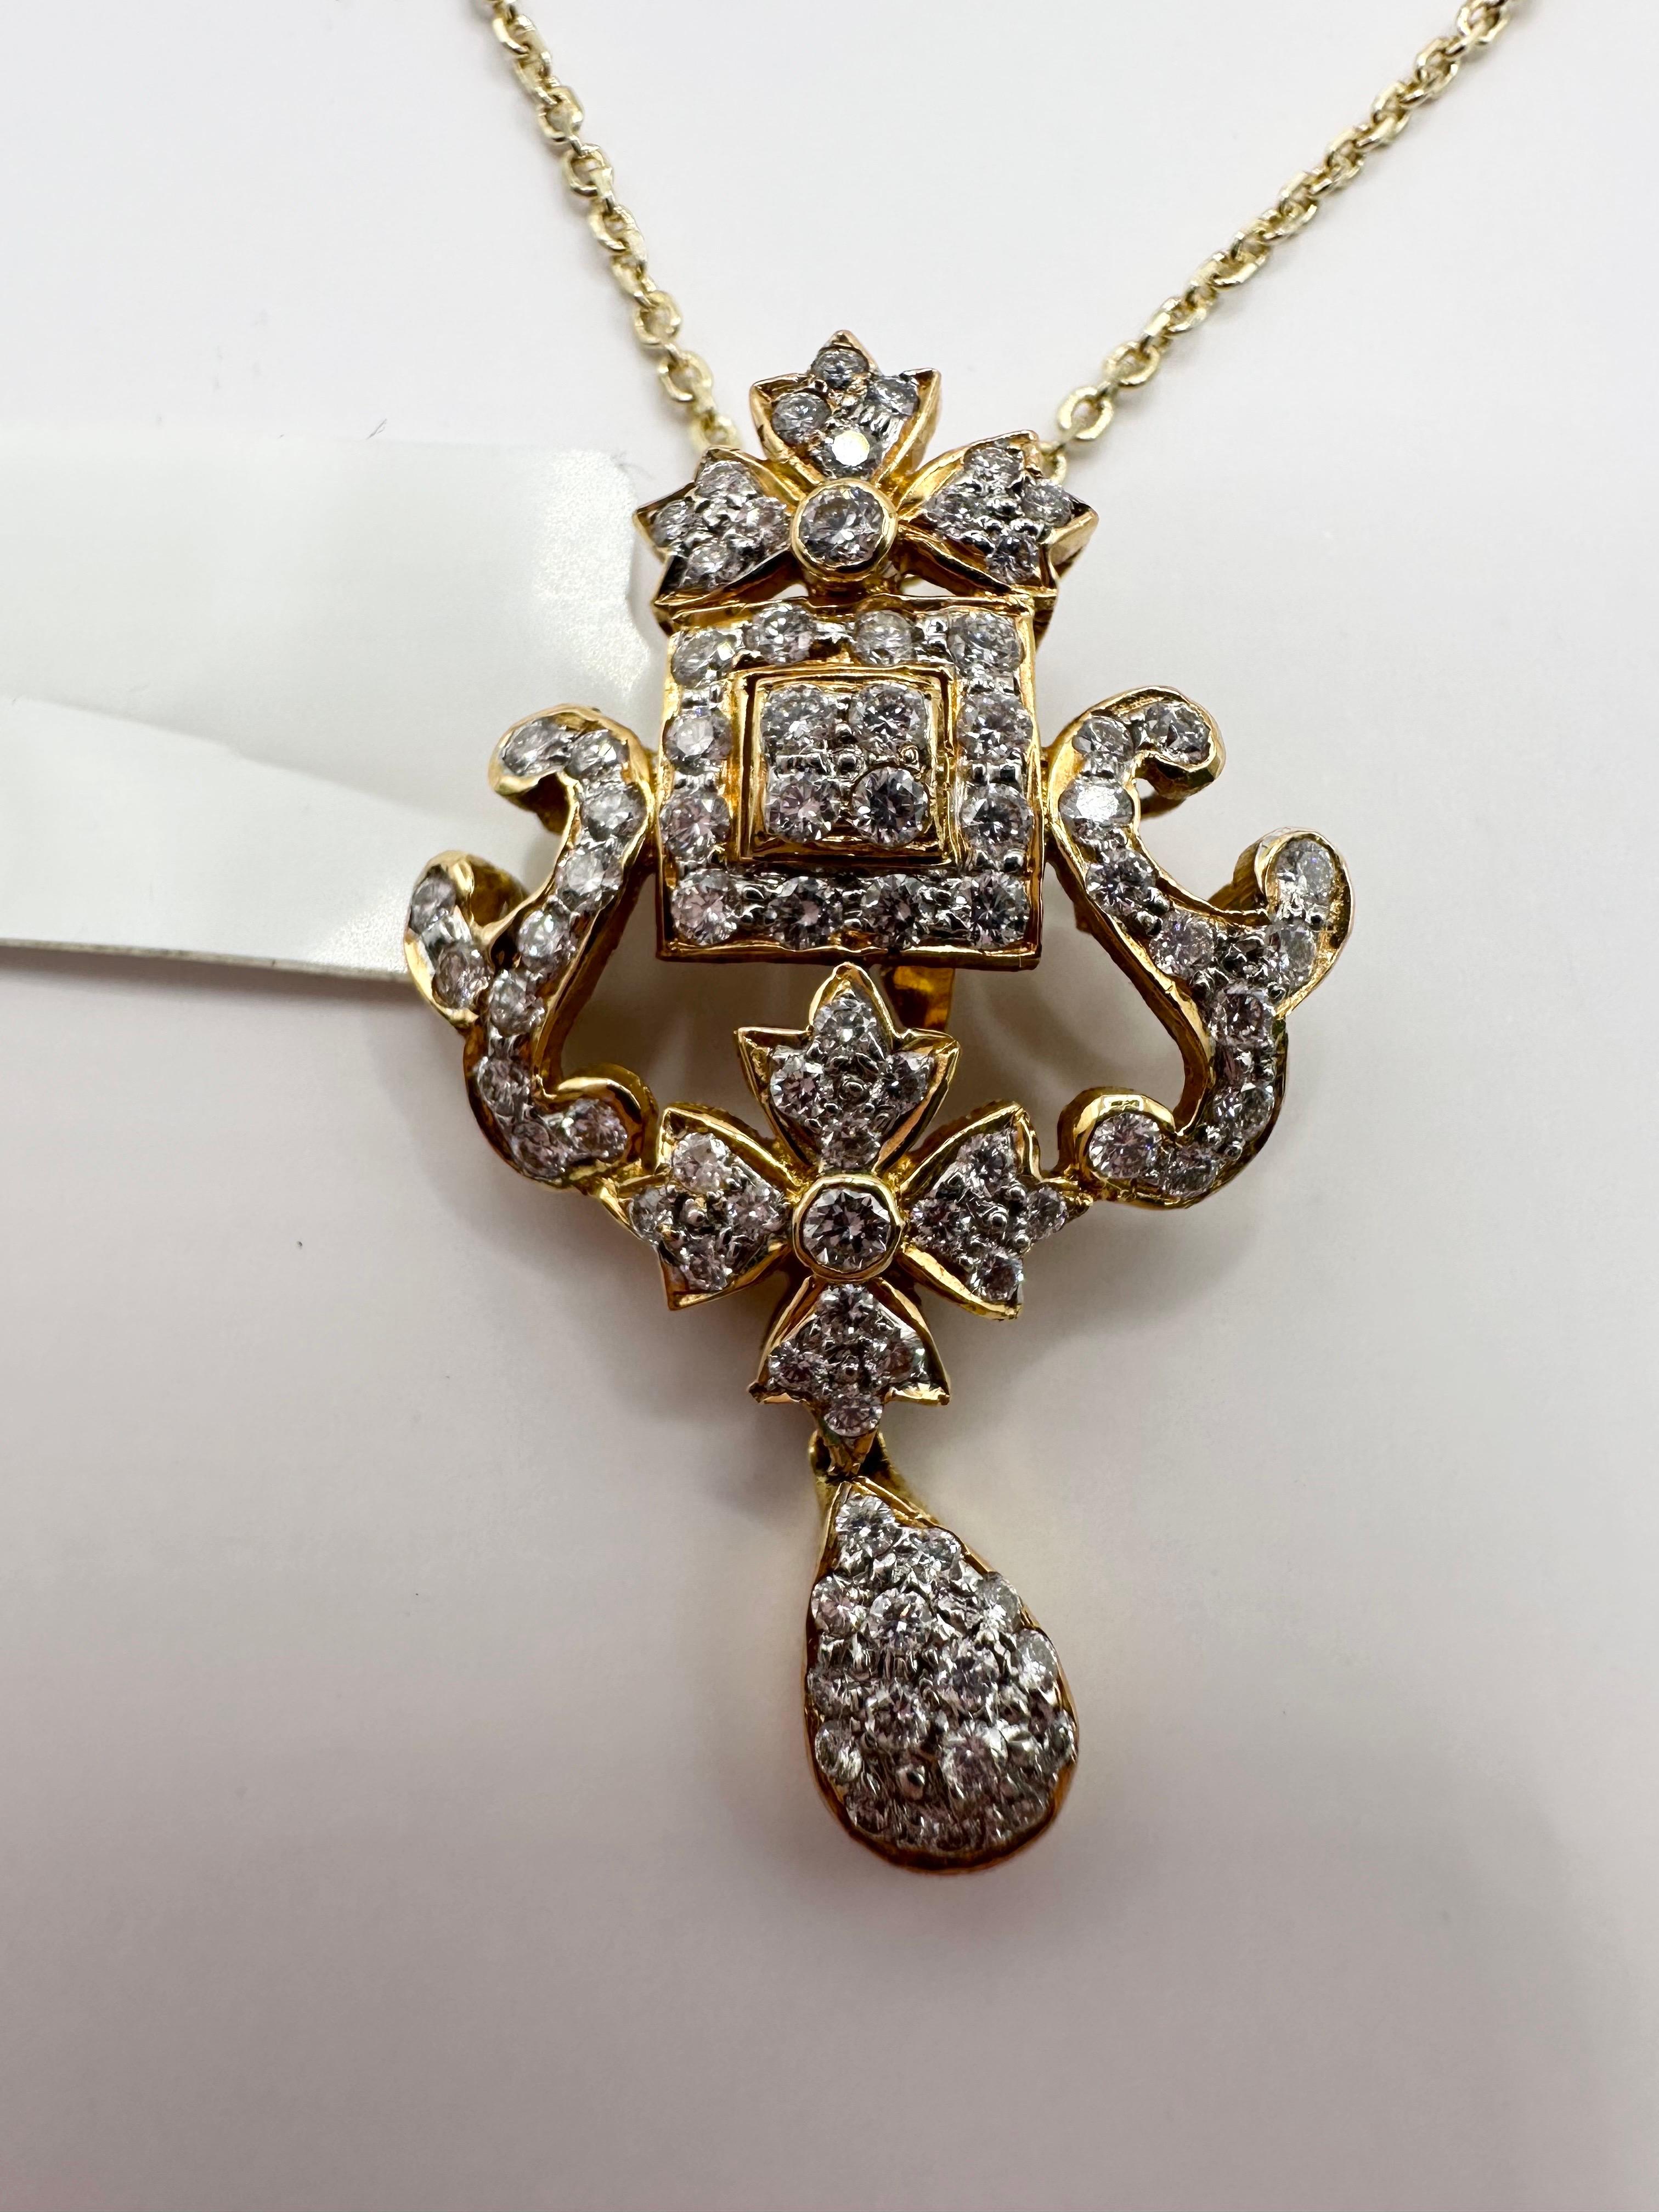 1ct Vintage diamond pendant necklace 18KT yellow gold chain 18